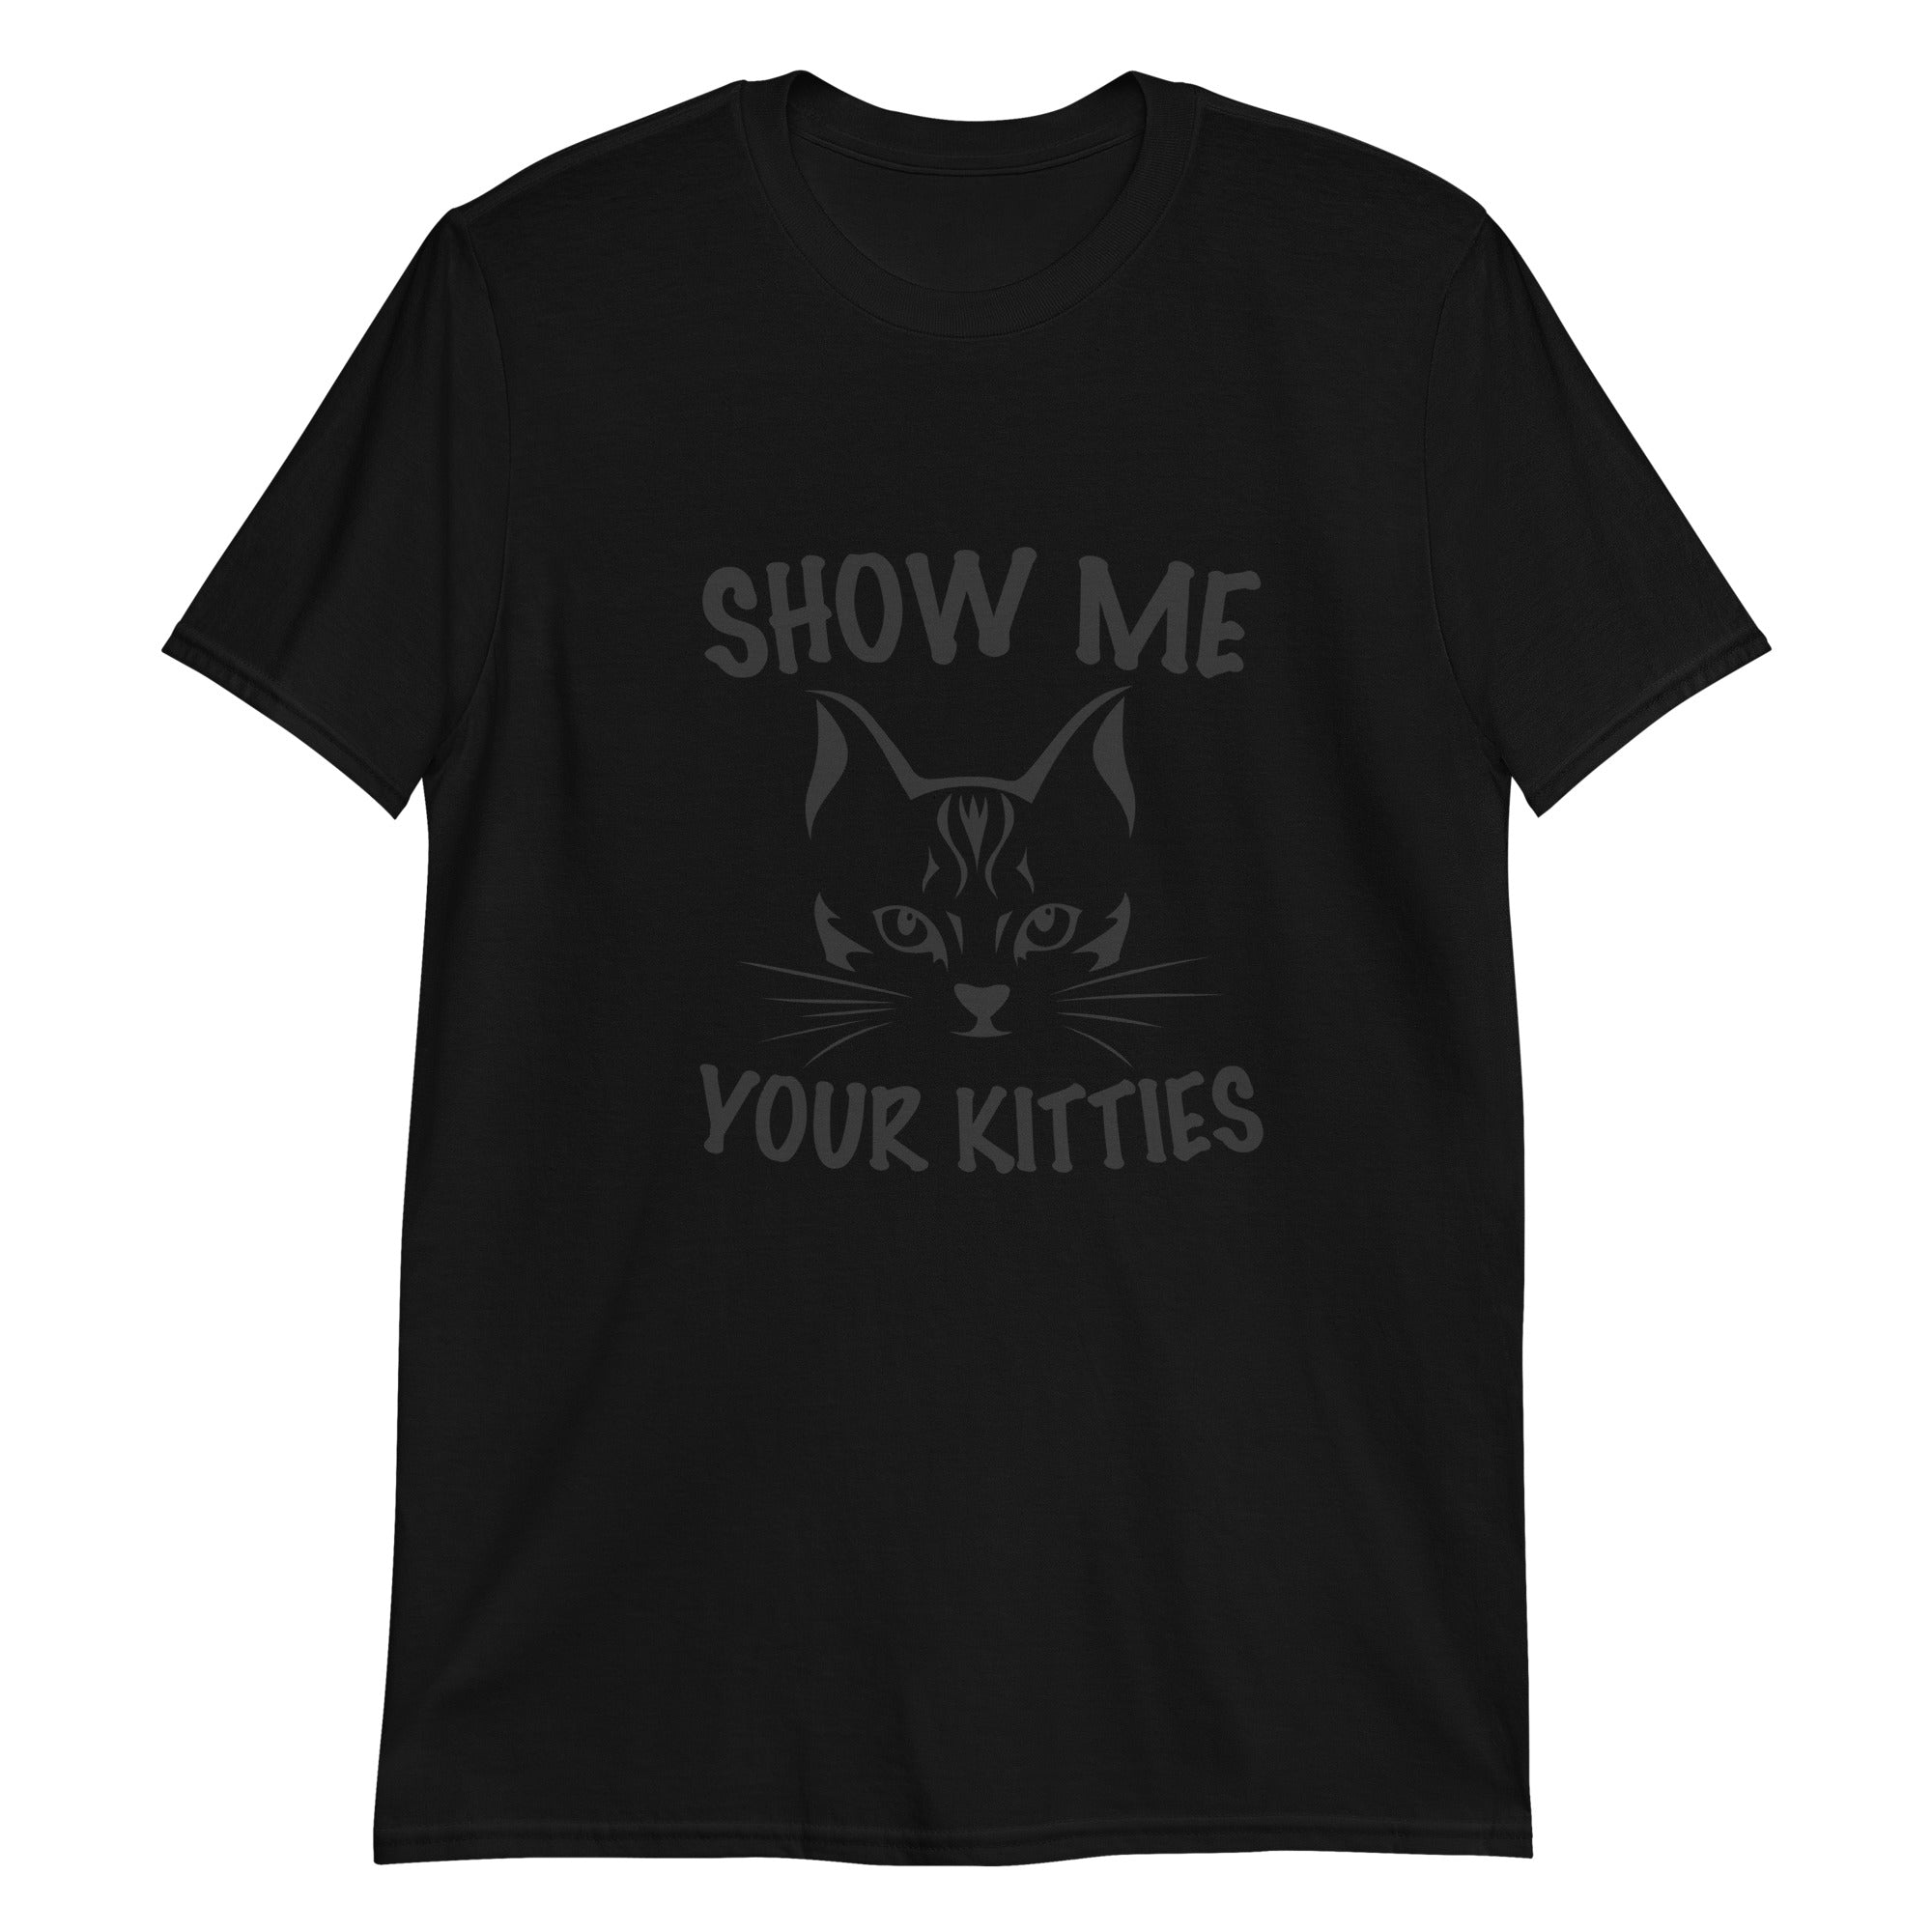 How Me Your Kitties Short-Sleeve Unisex T-Shirt